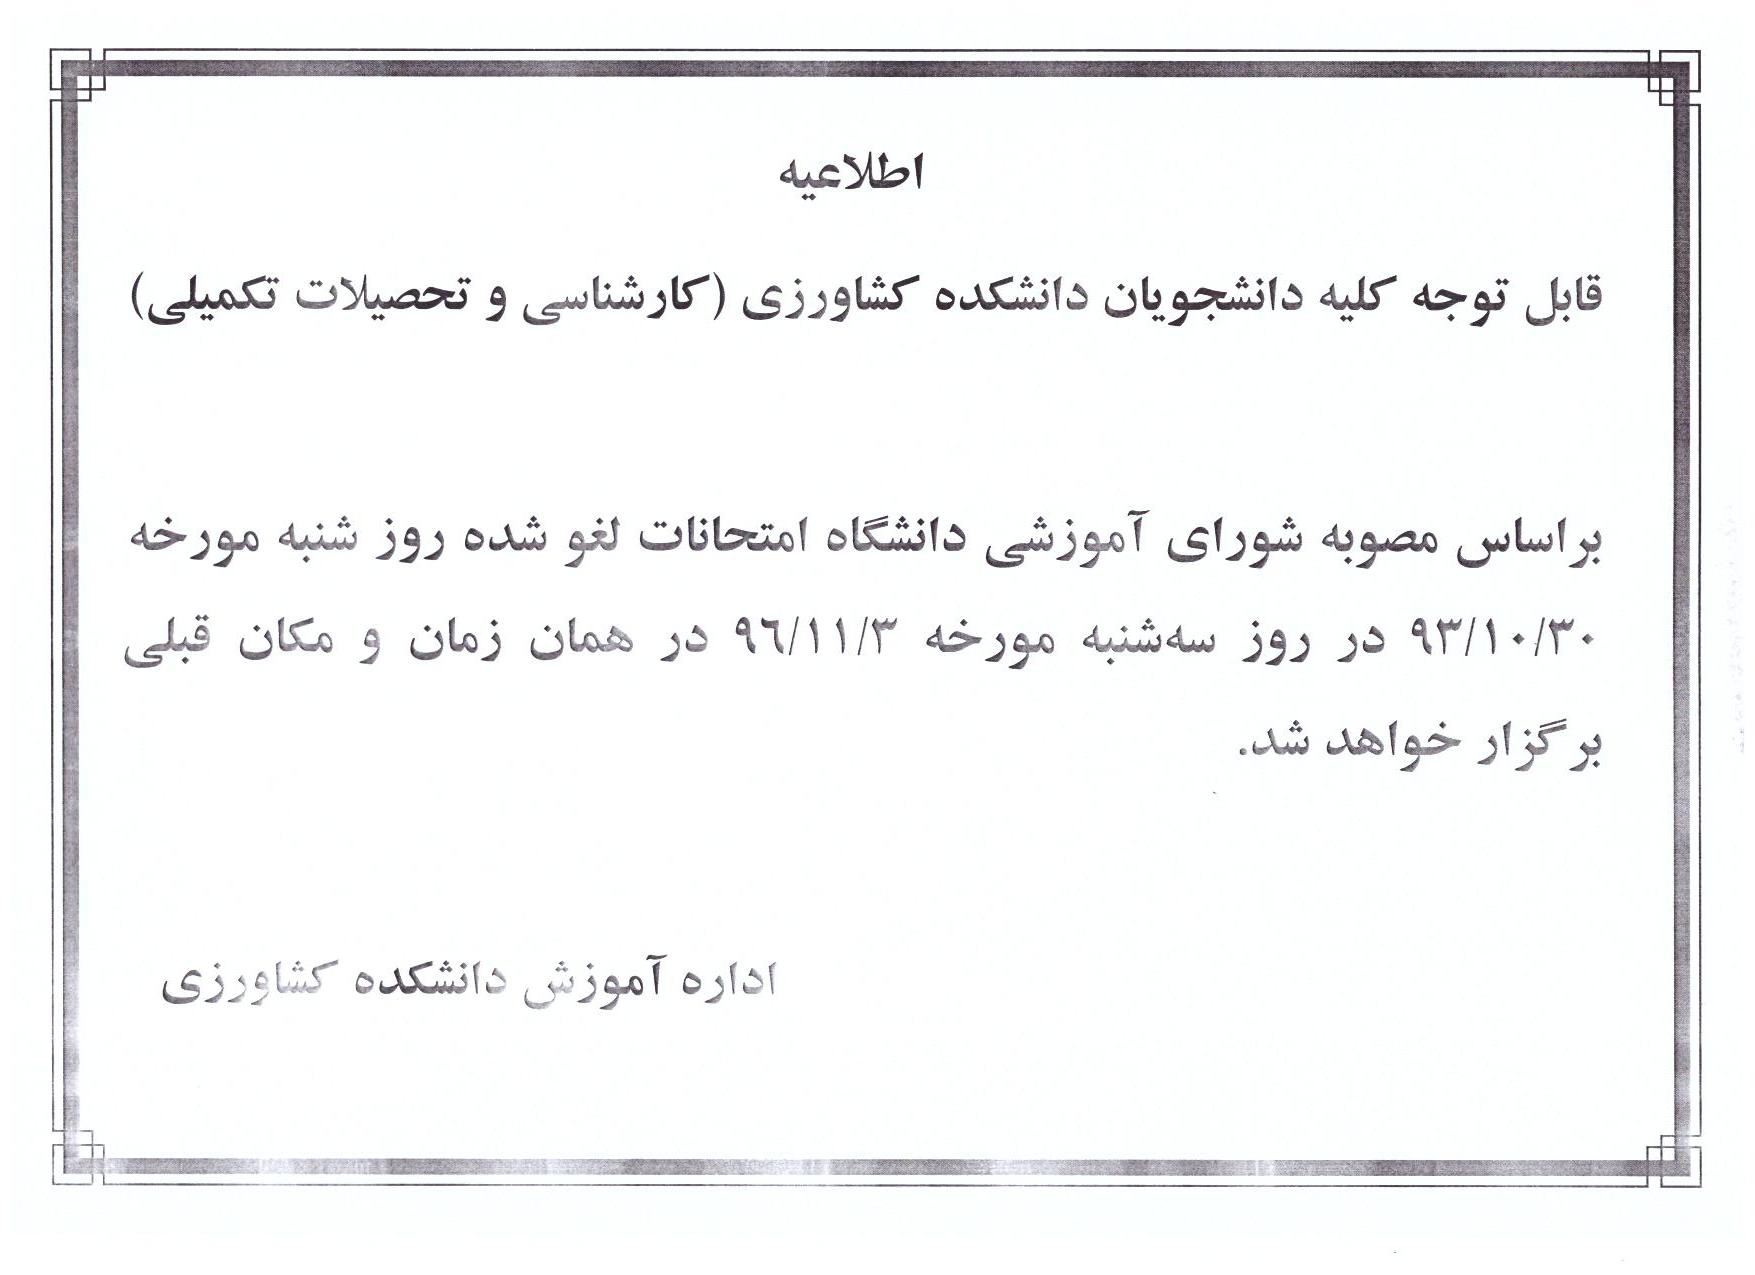 اعلام زمان برگزاري امتحانات معوق روز شنبه سي دي ماه 96